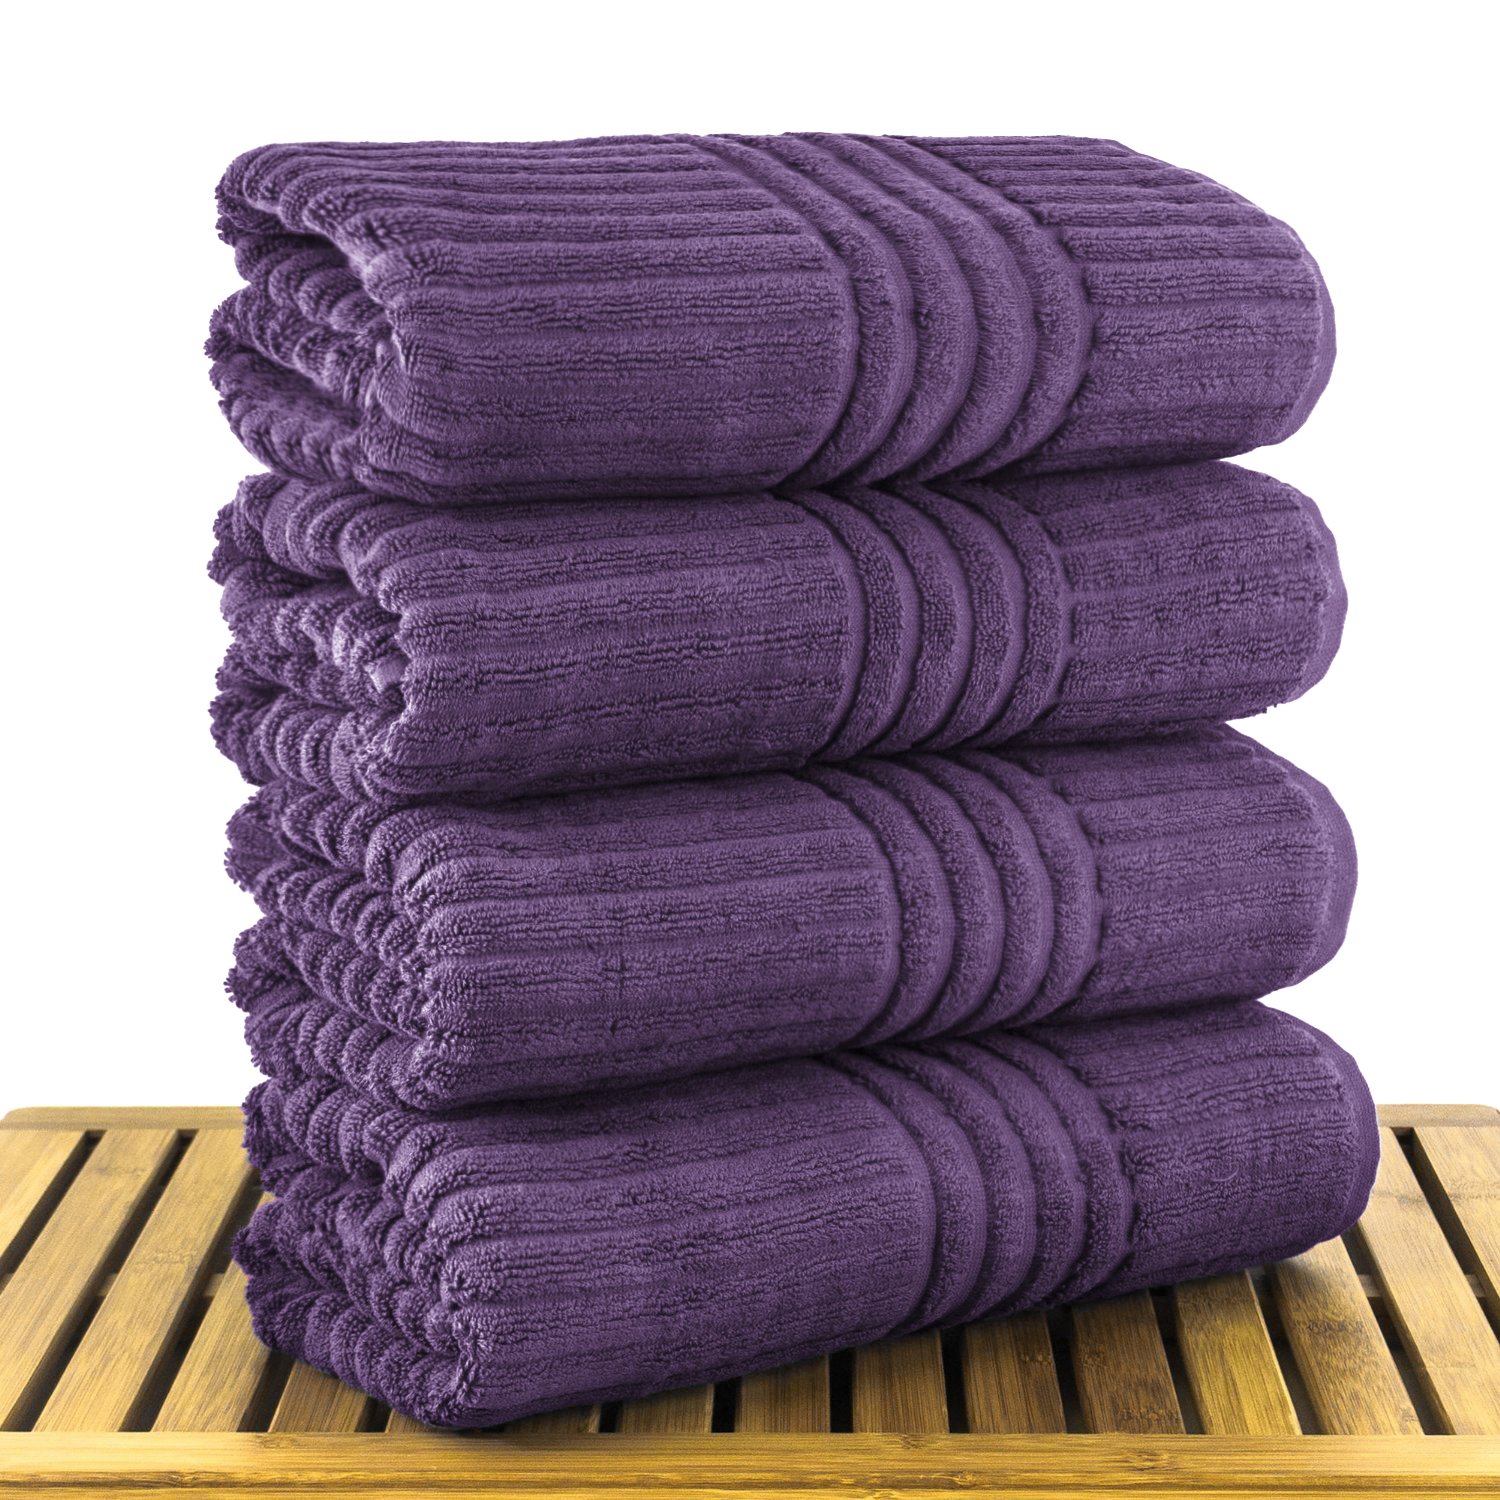 30" x 60" - 18 lbs/doz - %100 Turkish Cotton Plum Bath Towel - Striped Border-Robemart.com